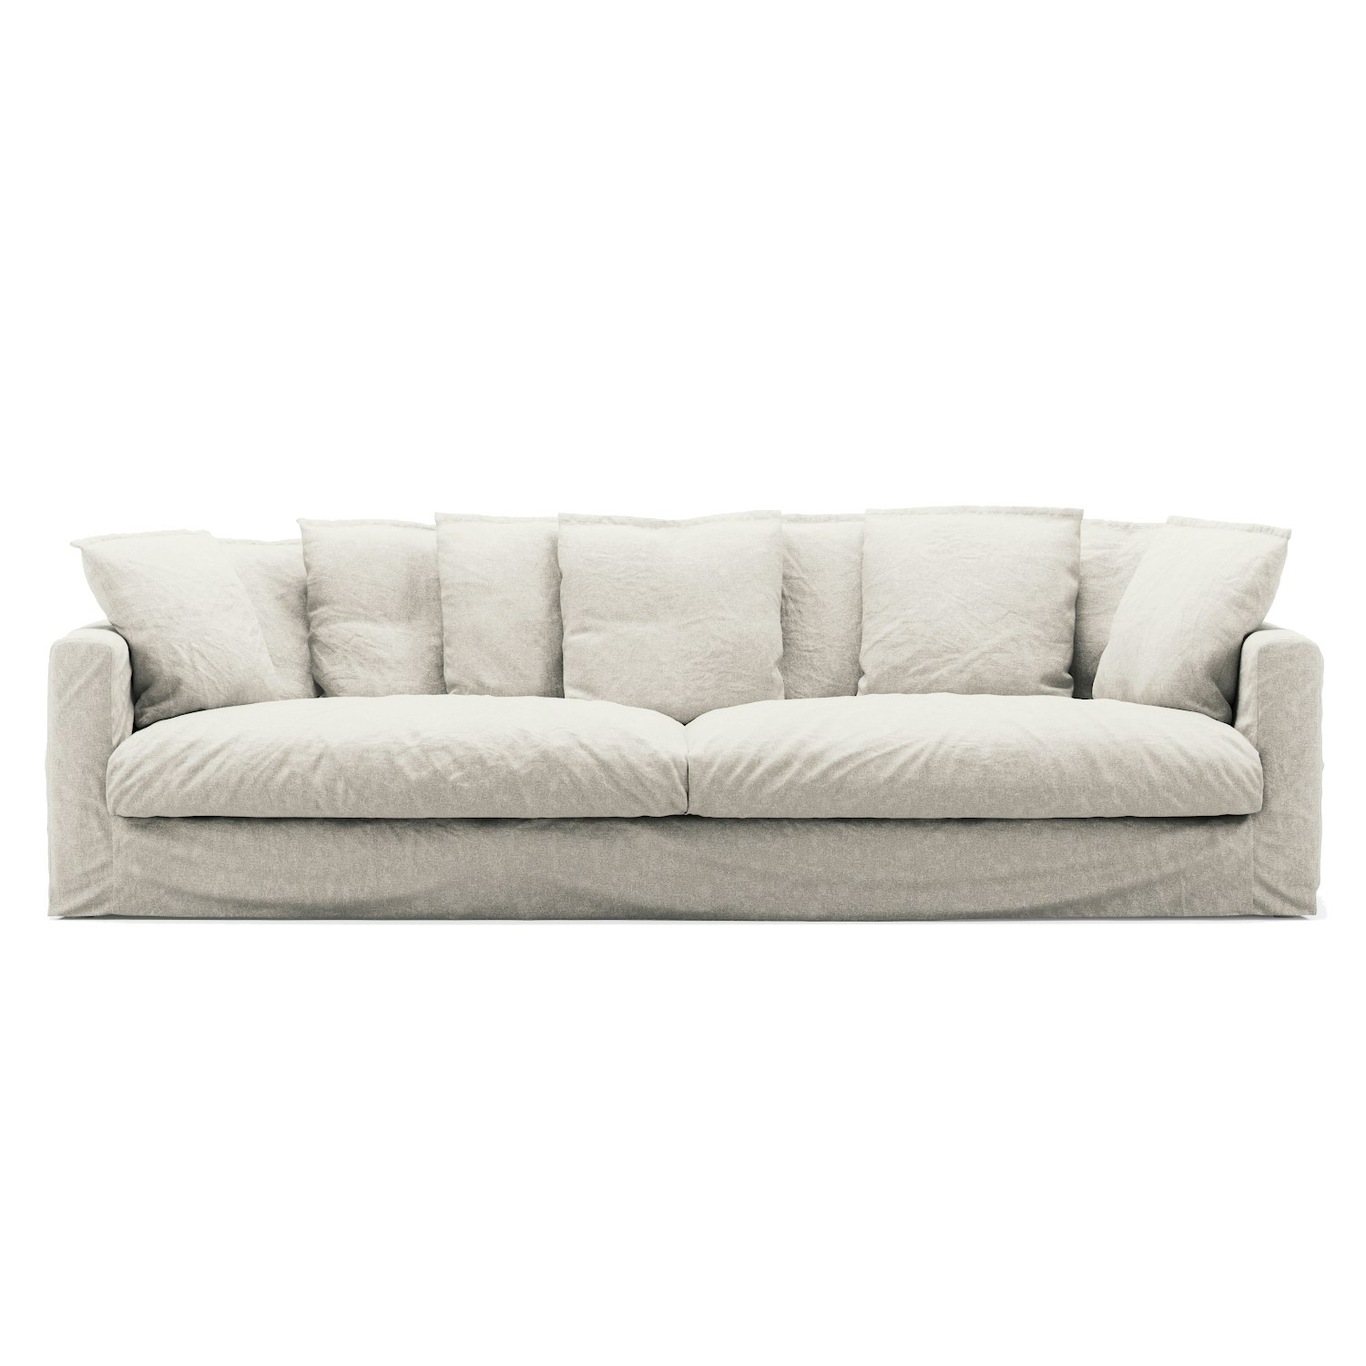 Le Grand Air 4-Sitzer-Sofa Leinen, Creamy White